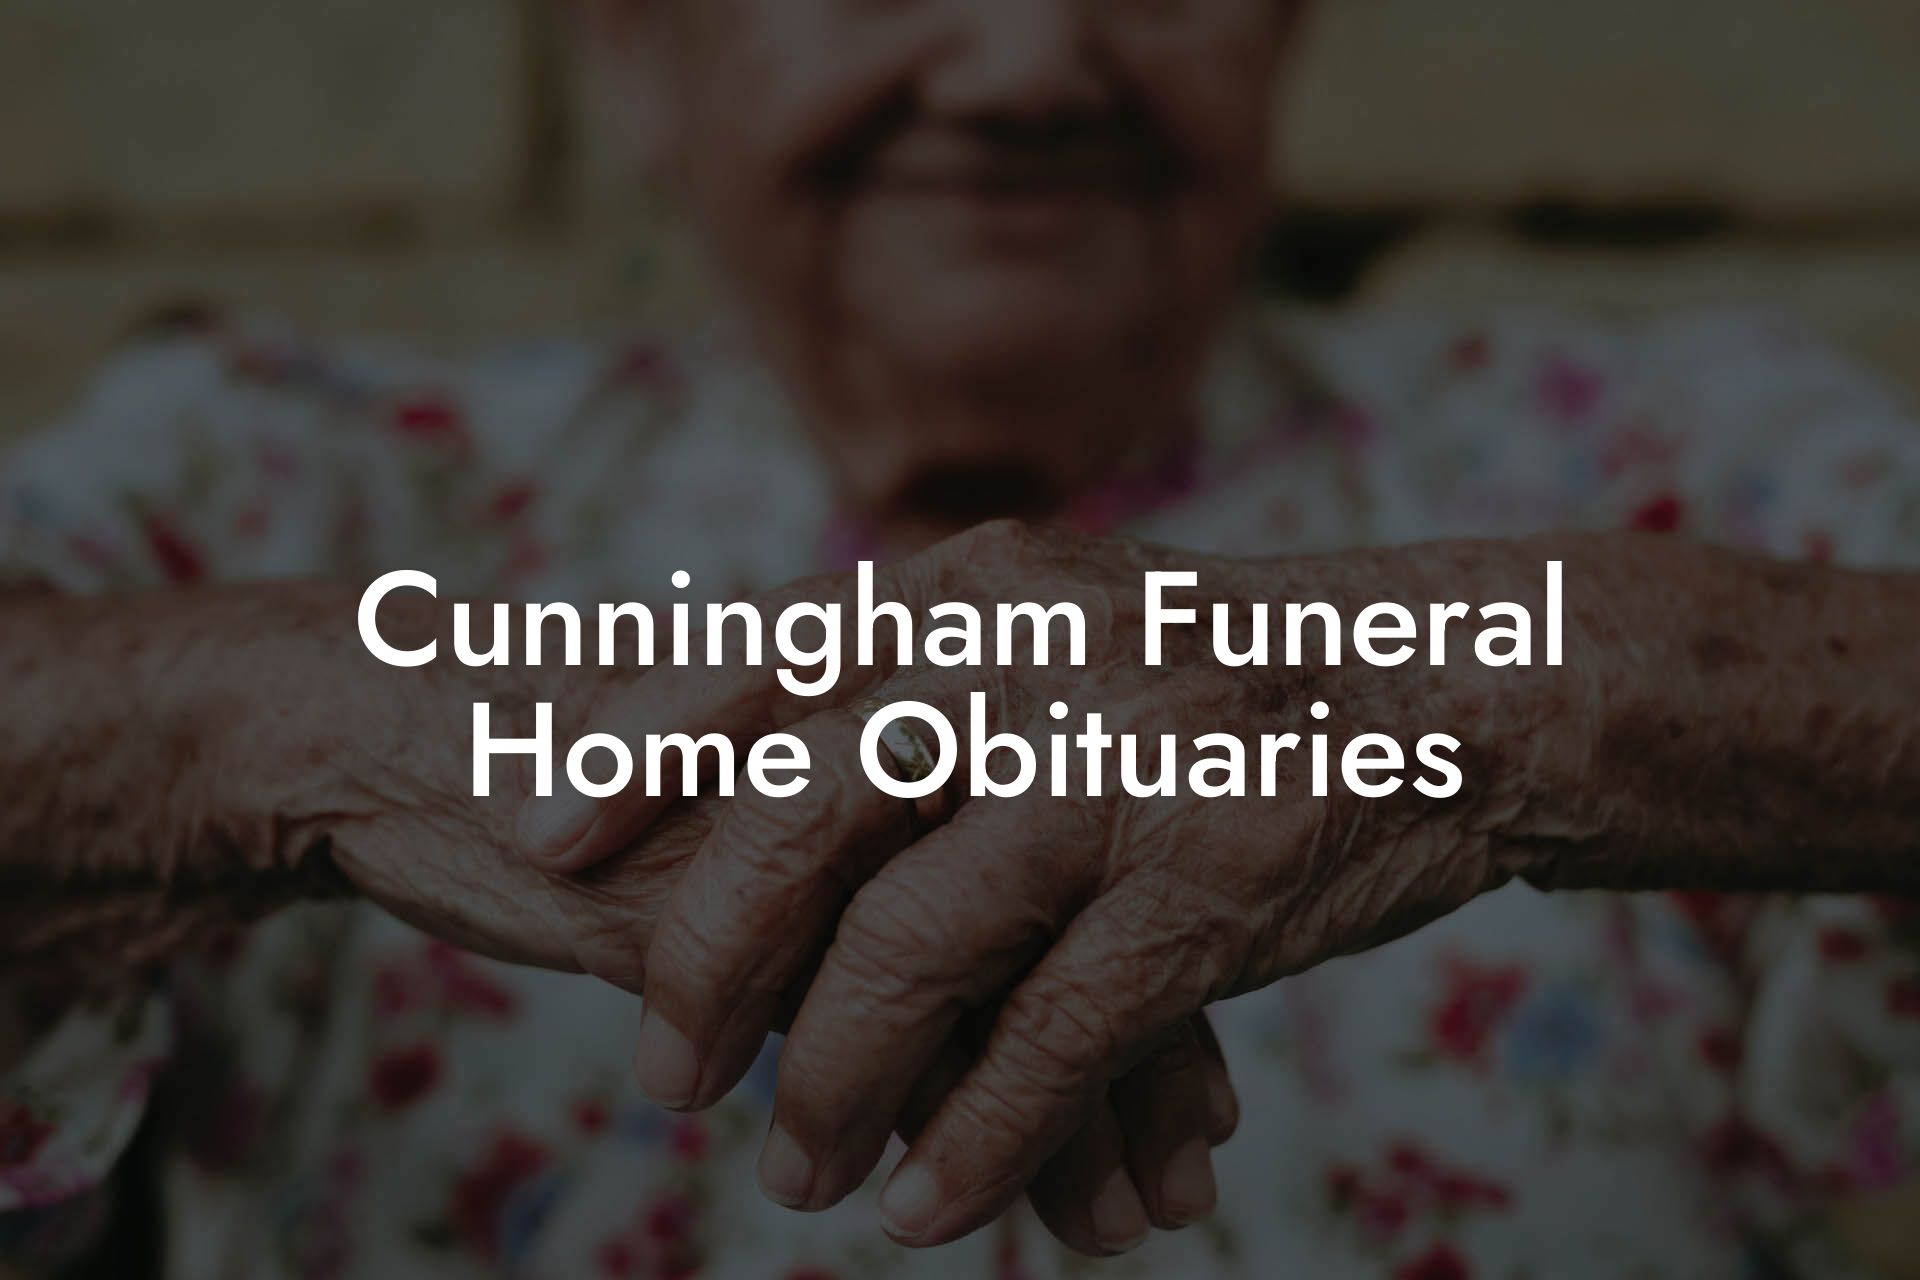 Cunningham Funeral Home Obituaries